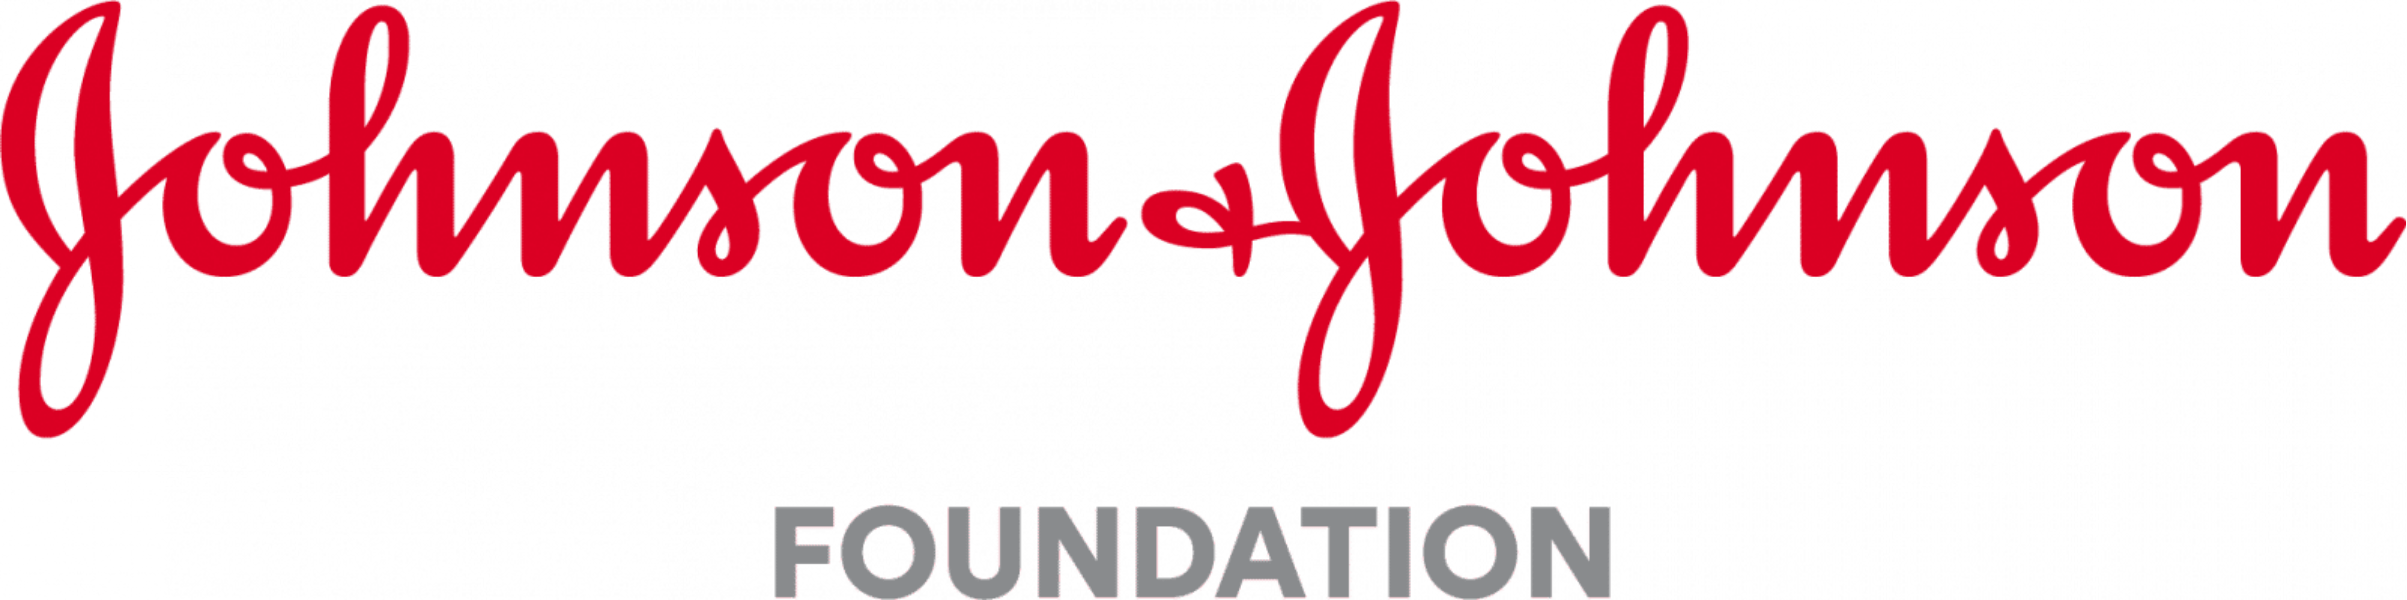 avp-logo-Johnson-and-Johnson-foundation-min